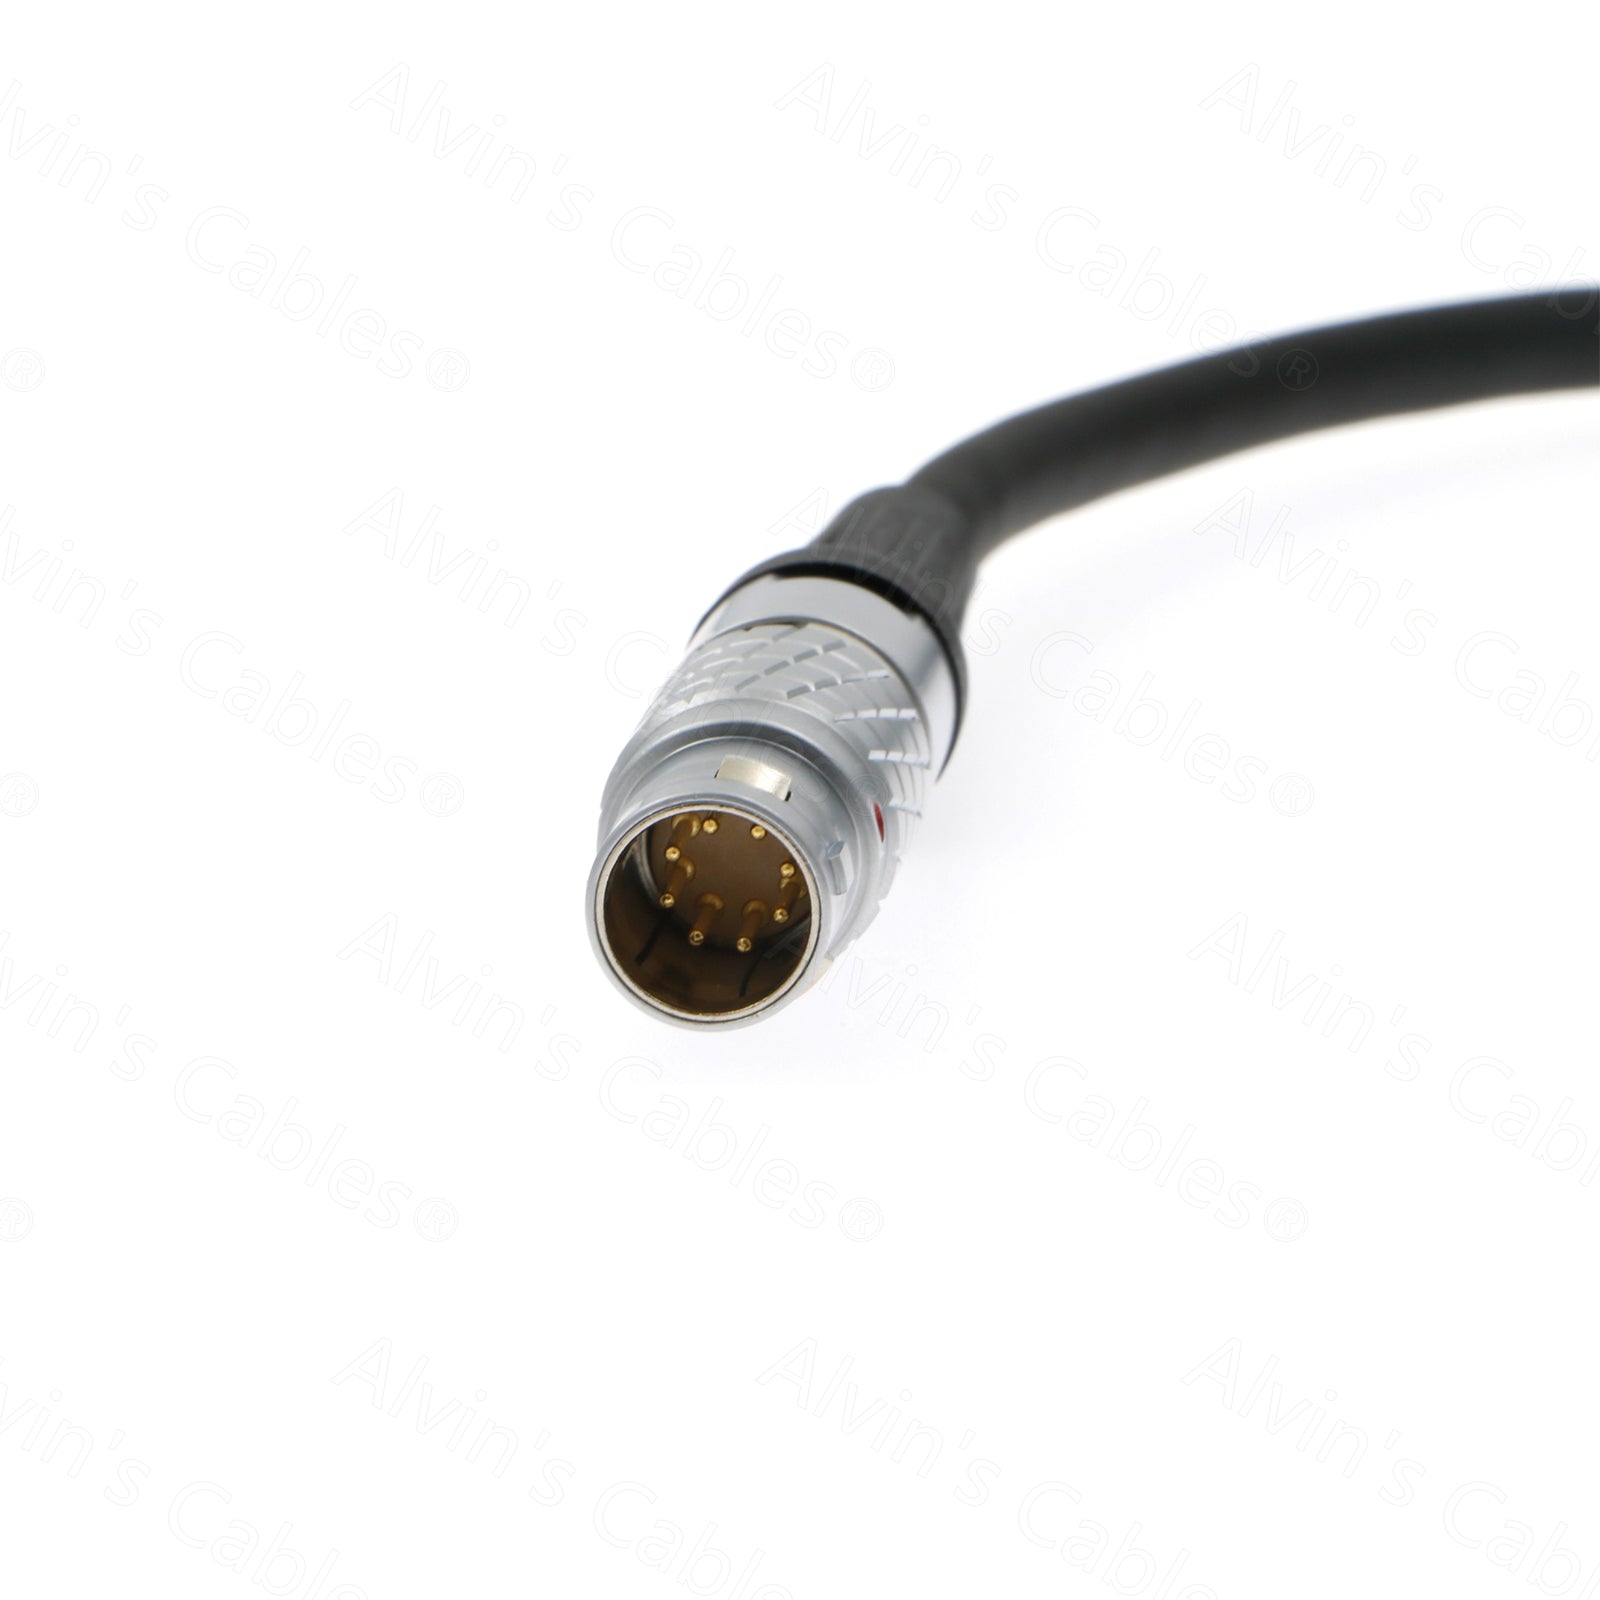 Control-Cable for Preston-MDR-2 Camera 12pin Male to 8pin Male Cable